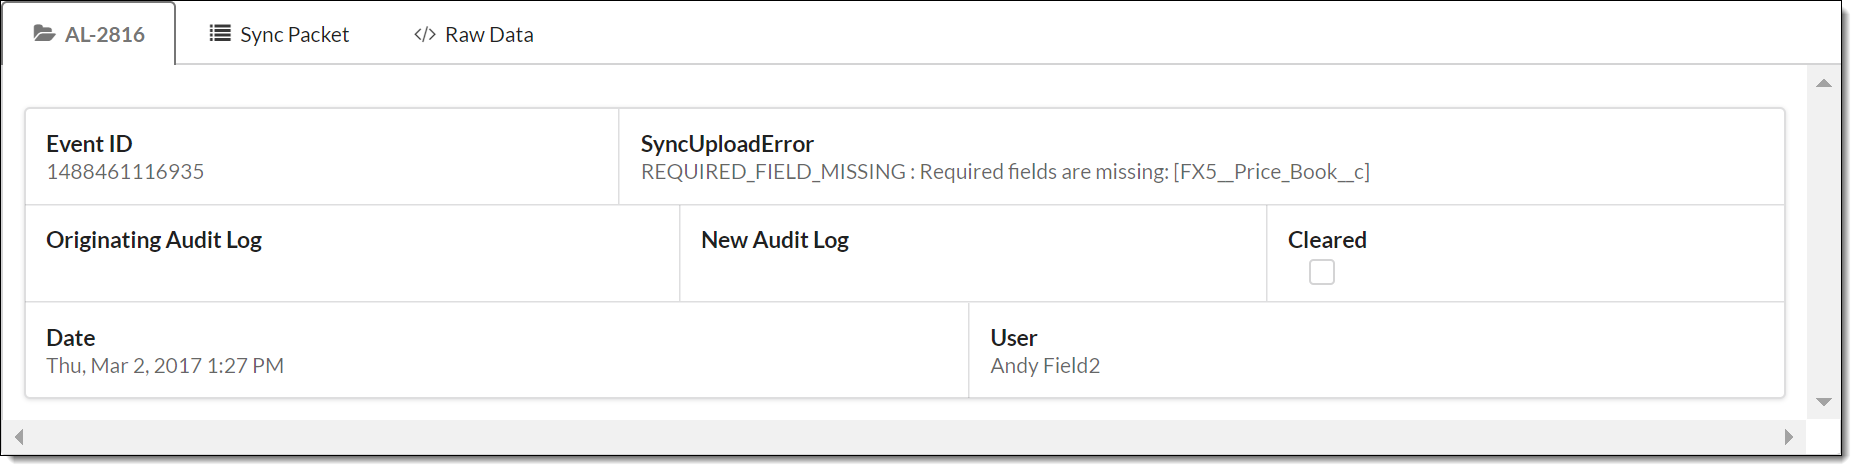 Screenshot of a sync packet’s audit log details